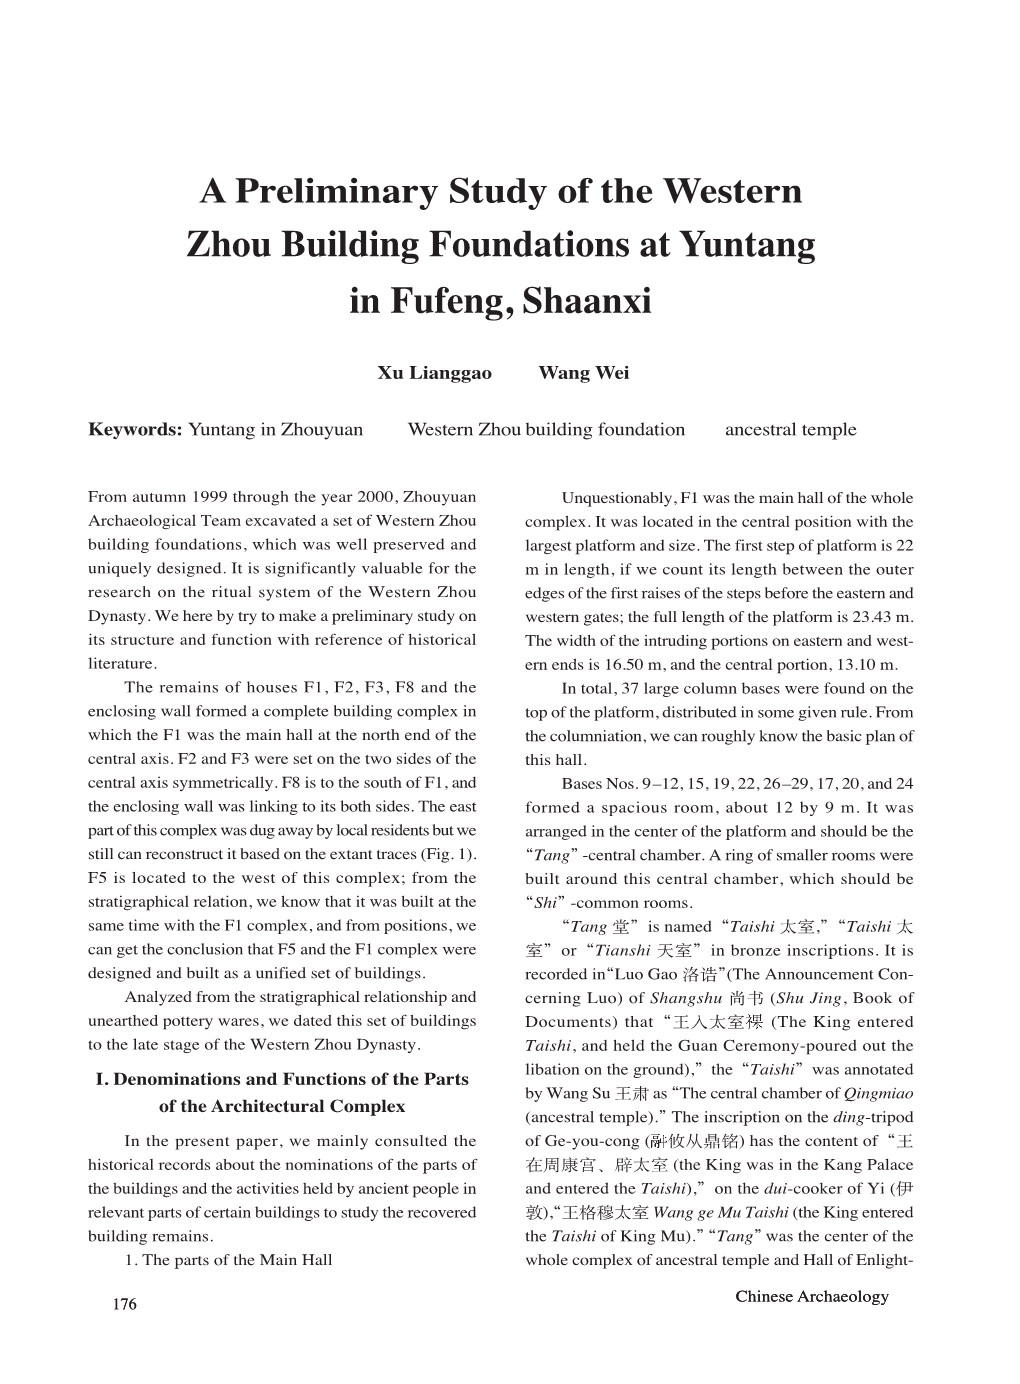 Zhou Building Foundations at Yuntang in Fufeng, Shaanxi